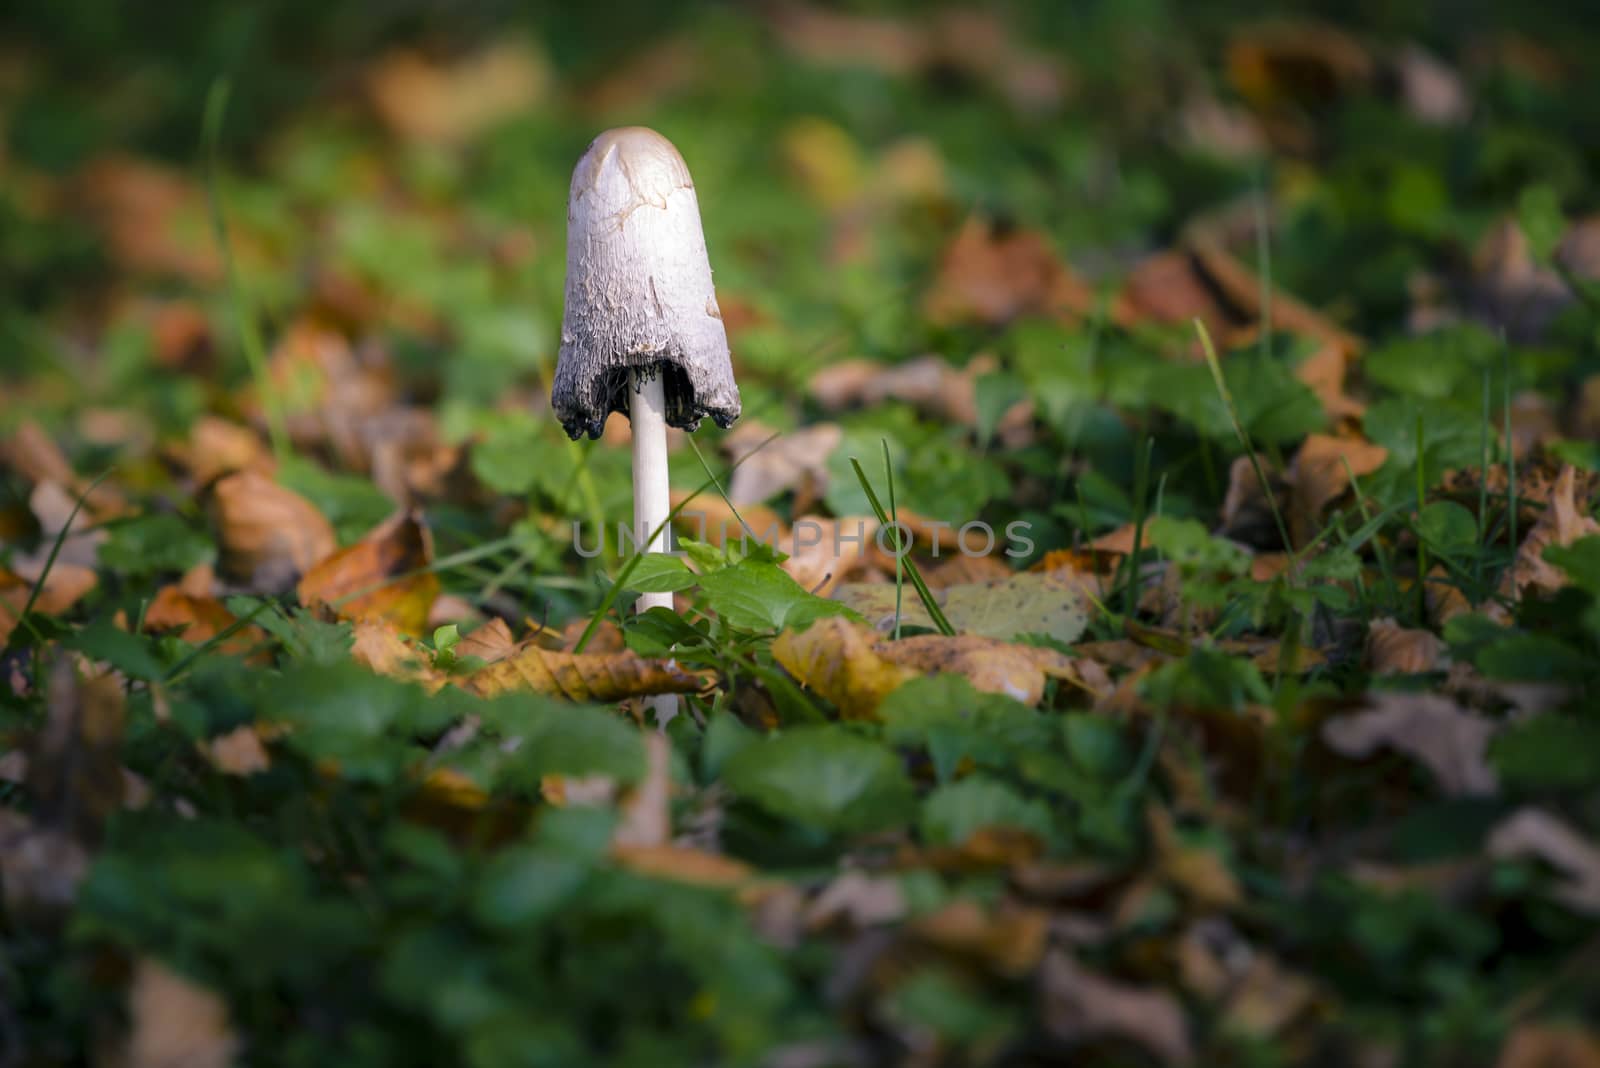 Mushroom in autumn foliage by asafaric